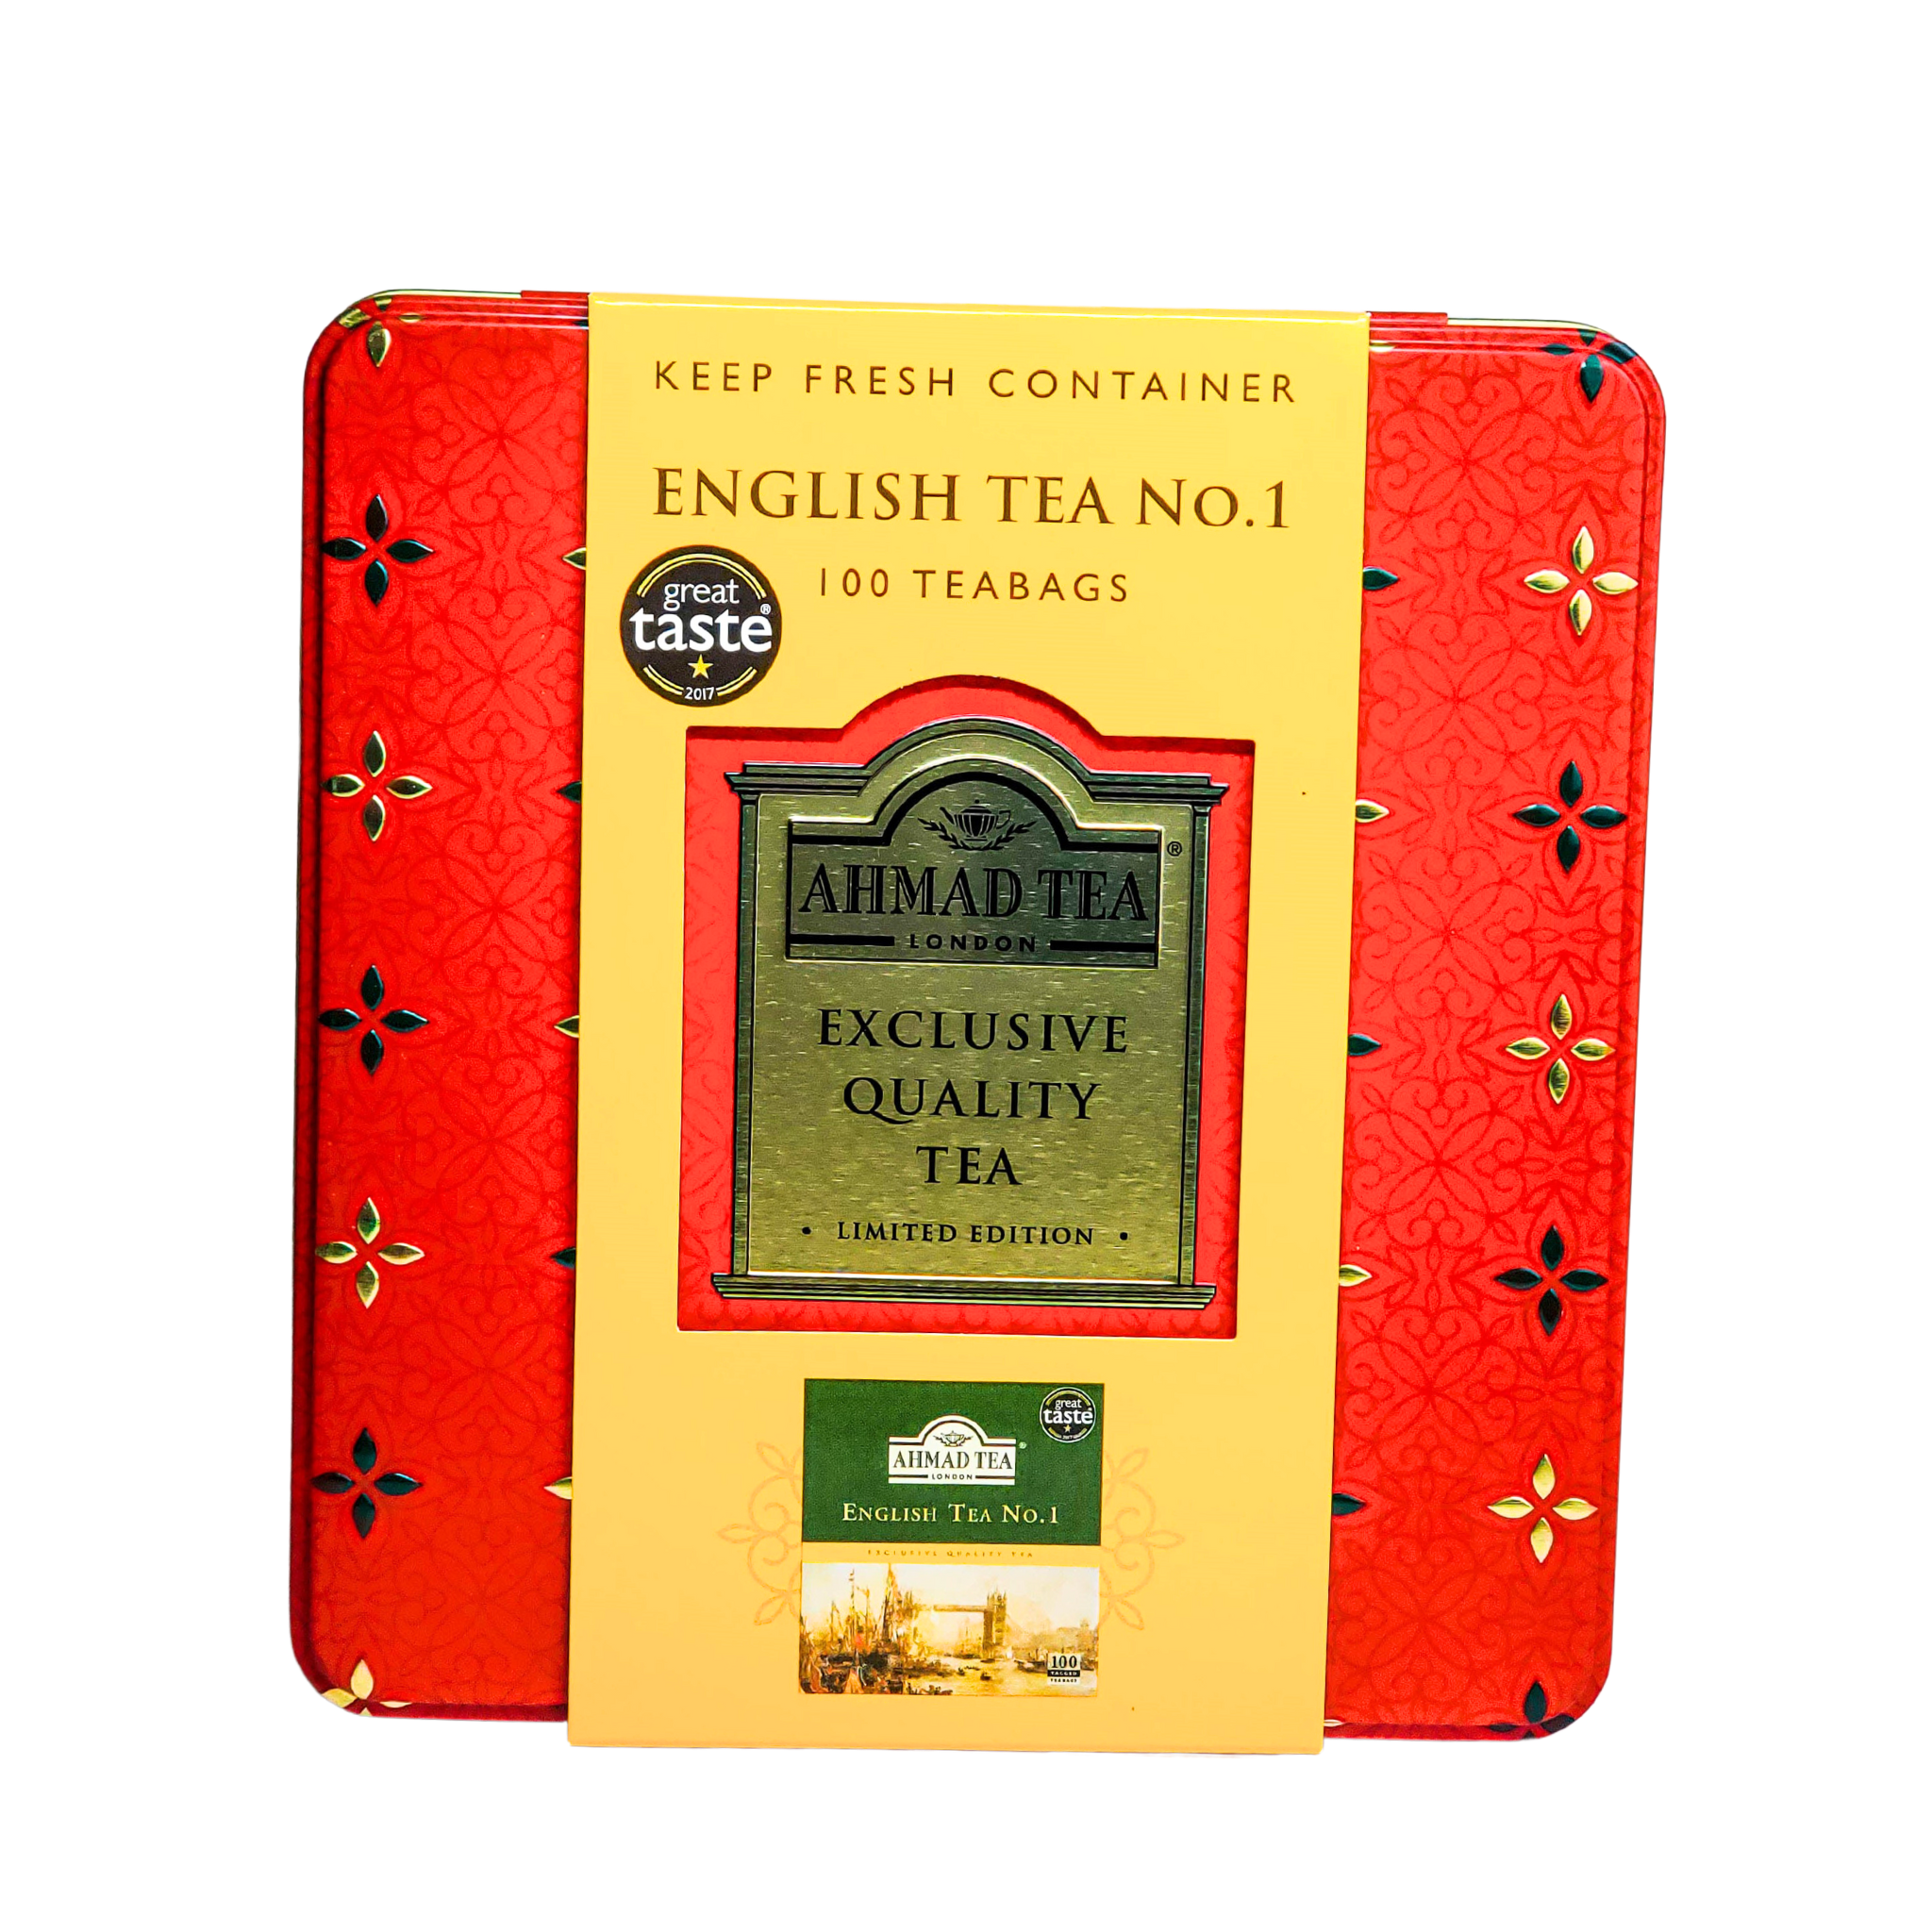 Ahmad Tea London English Tea No.1 Limited Edition